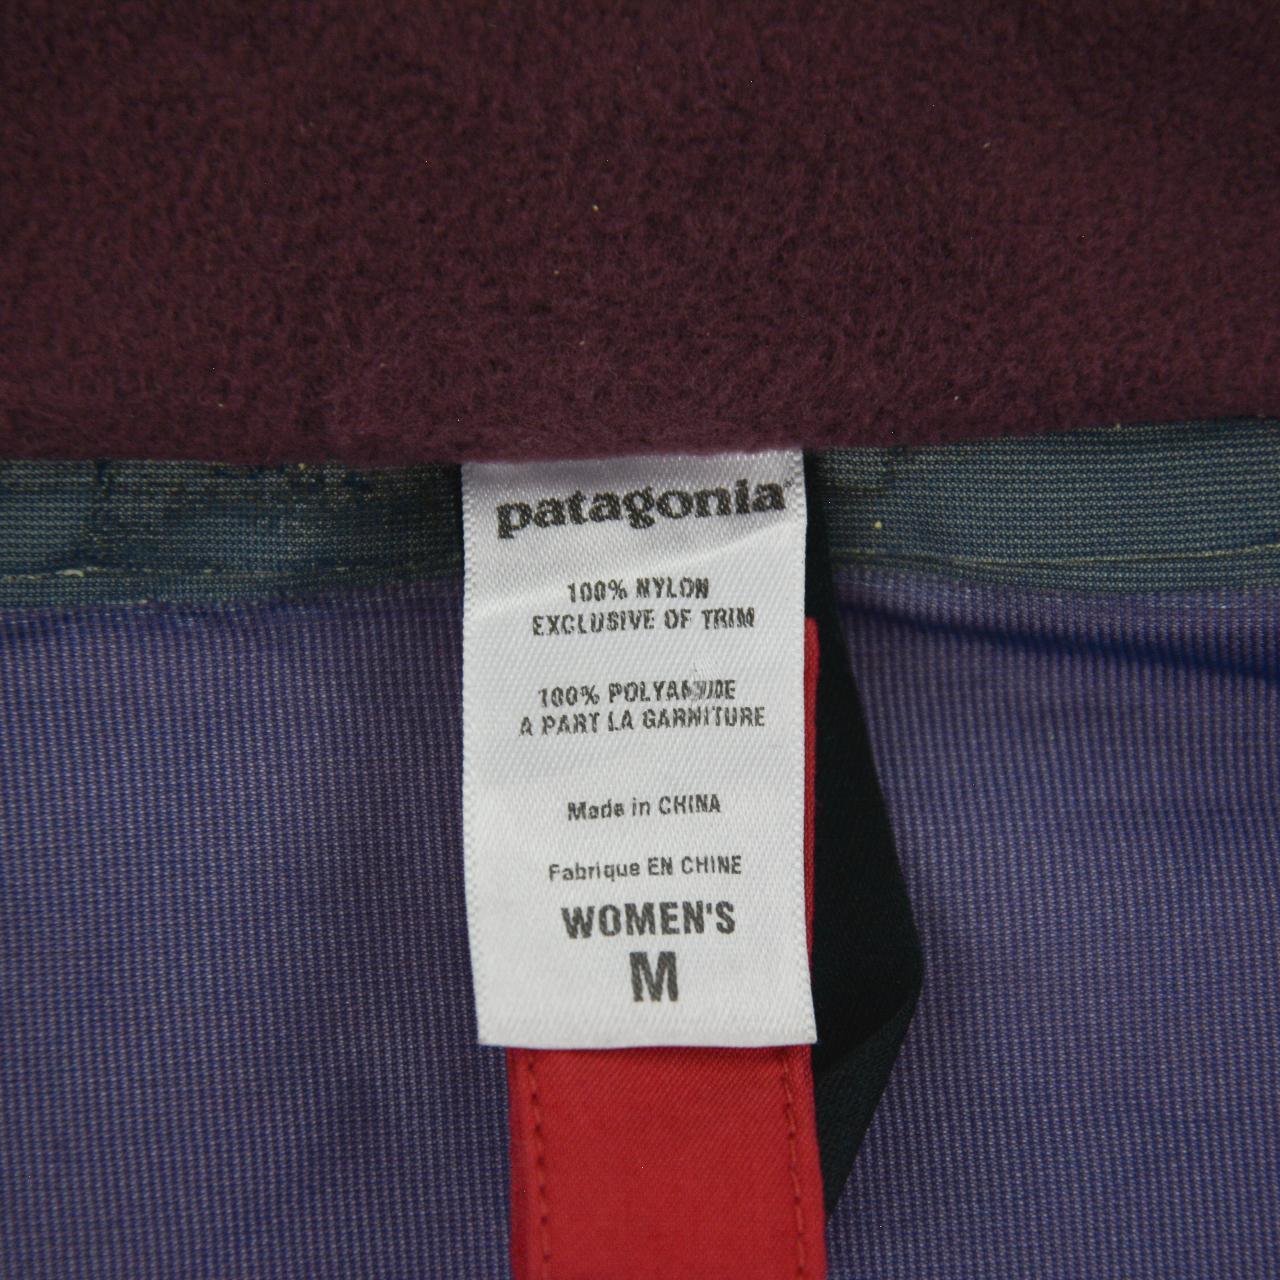 Vintage Patagonia Jacket Women's Size M - Known Source